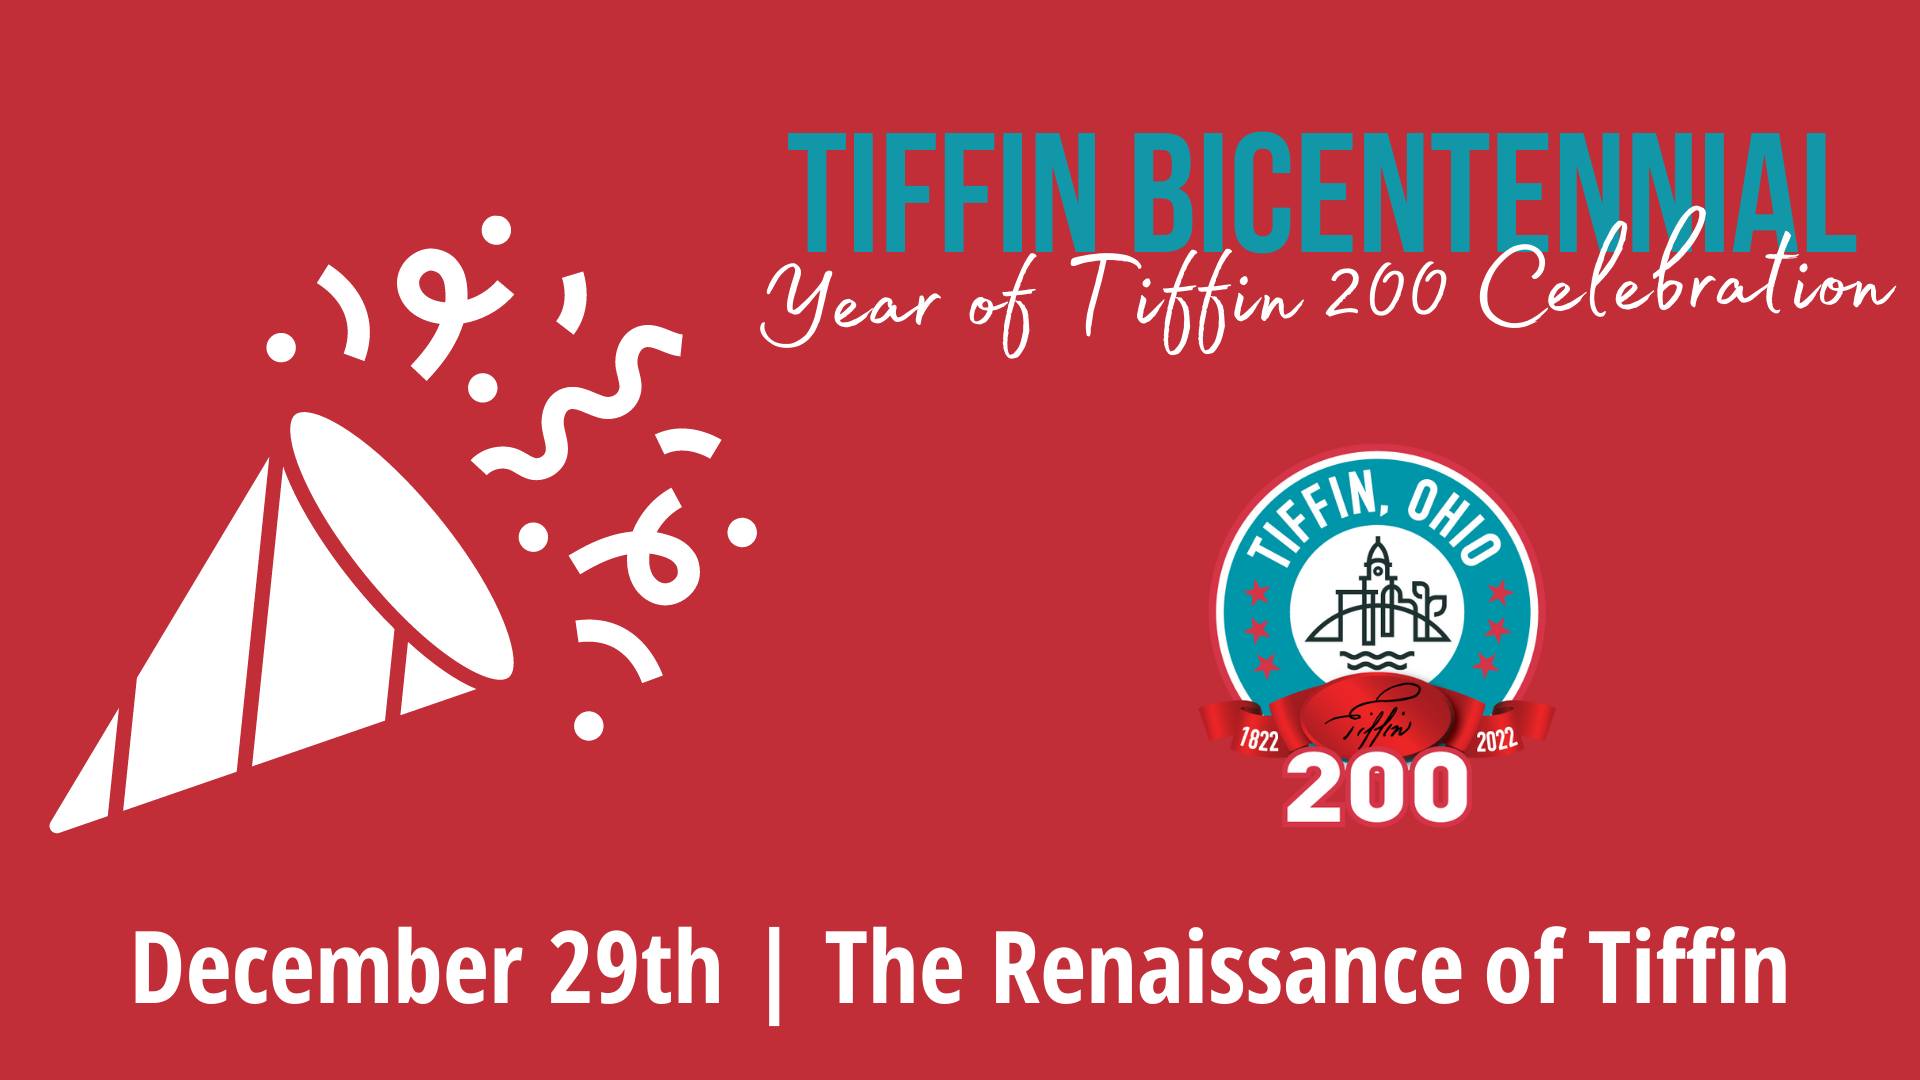 Tiffin Bicentennial: The Year of Tiffin 200 Celebration